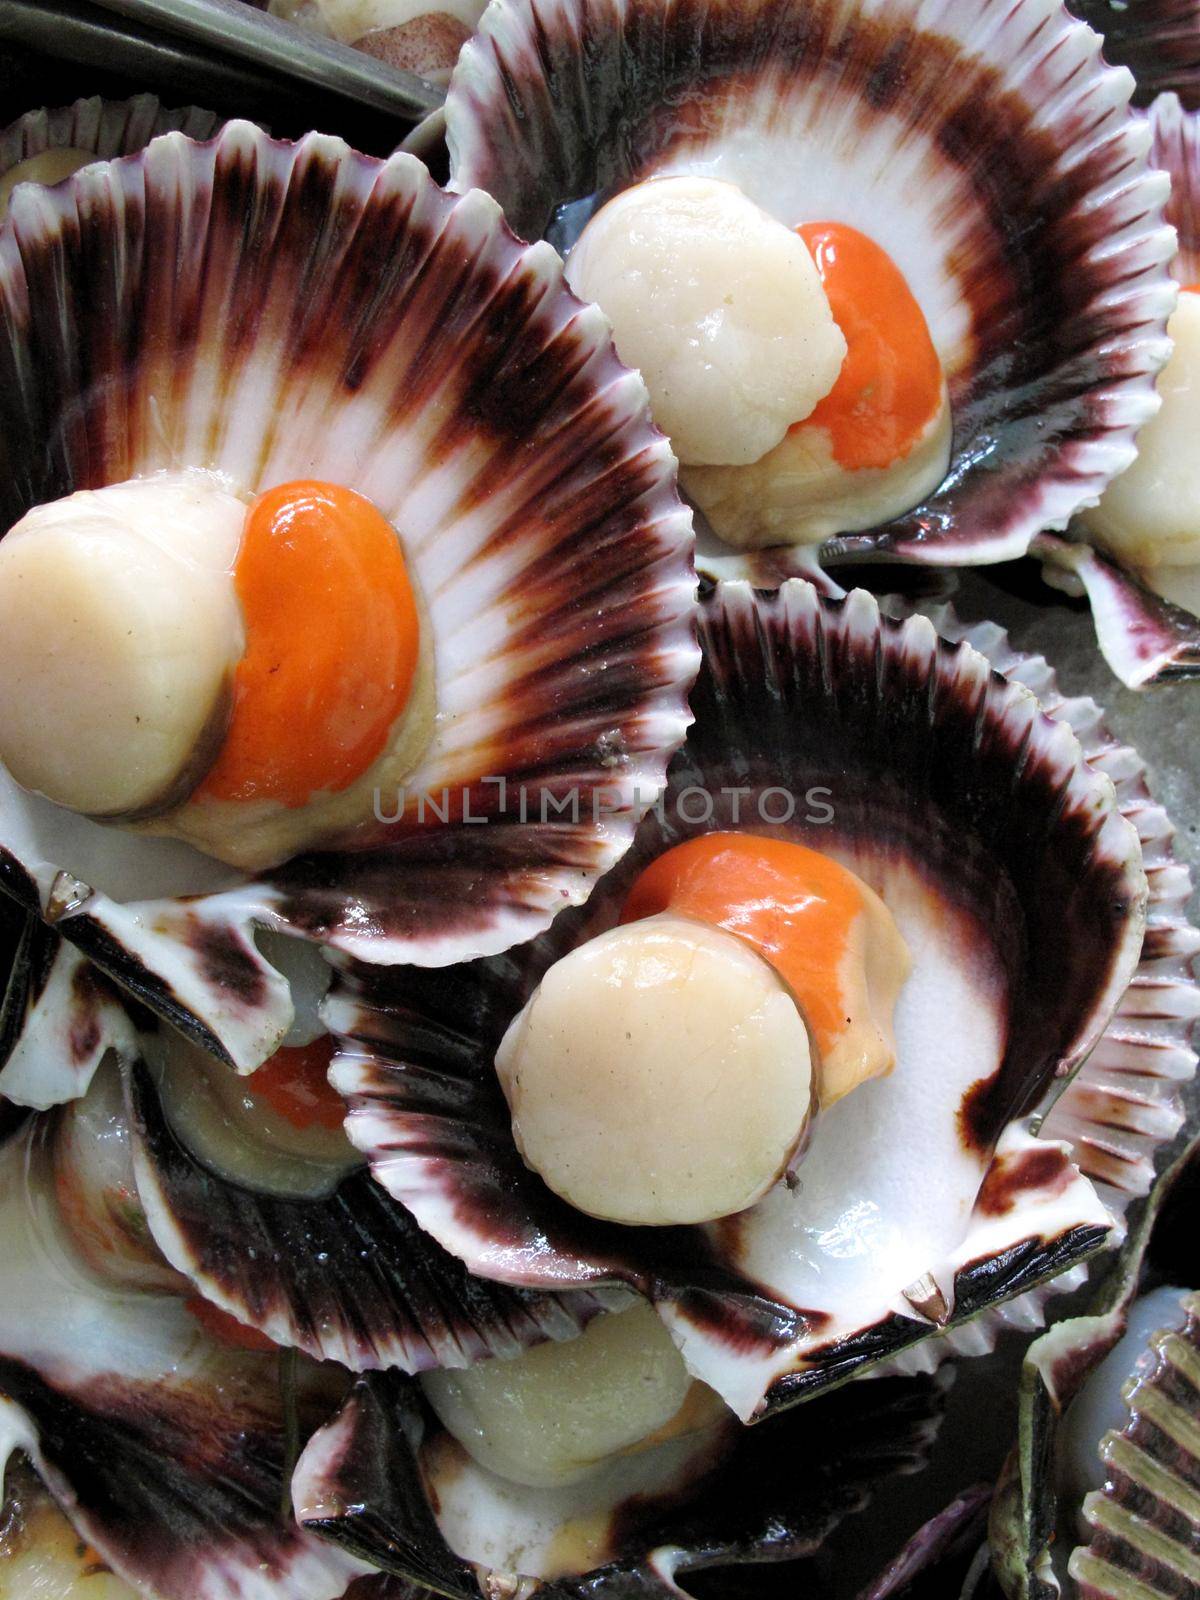 Seashell raw seafood